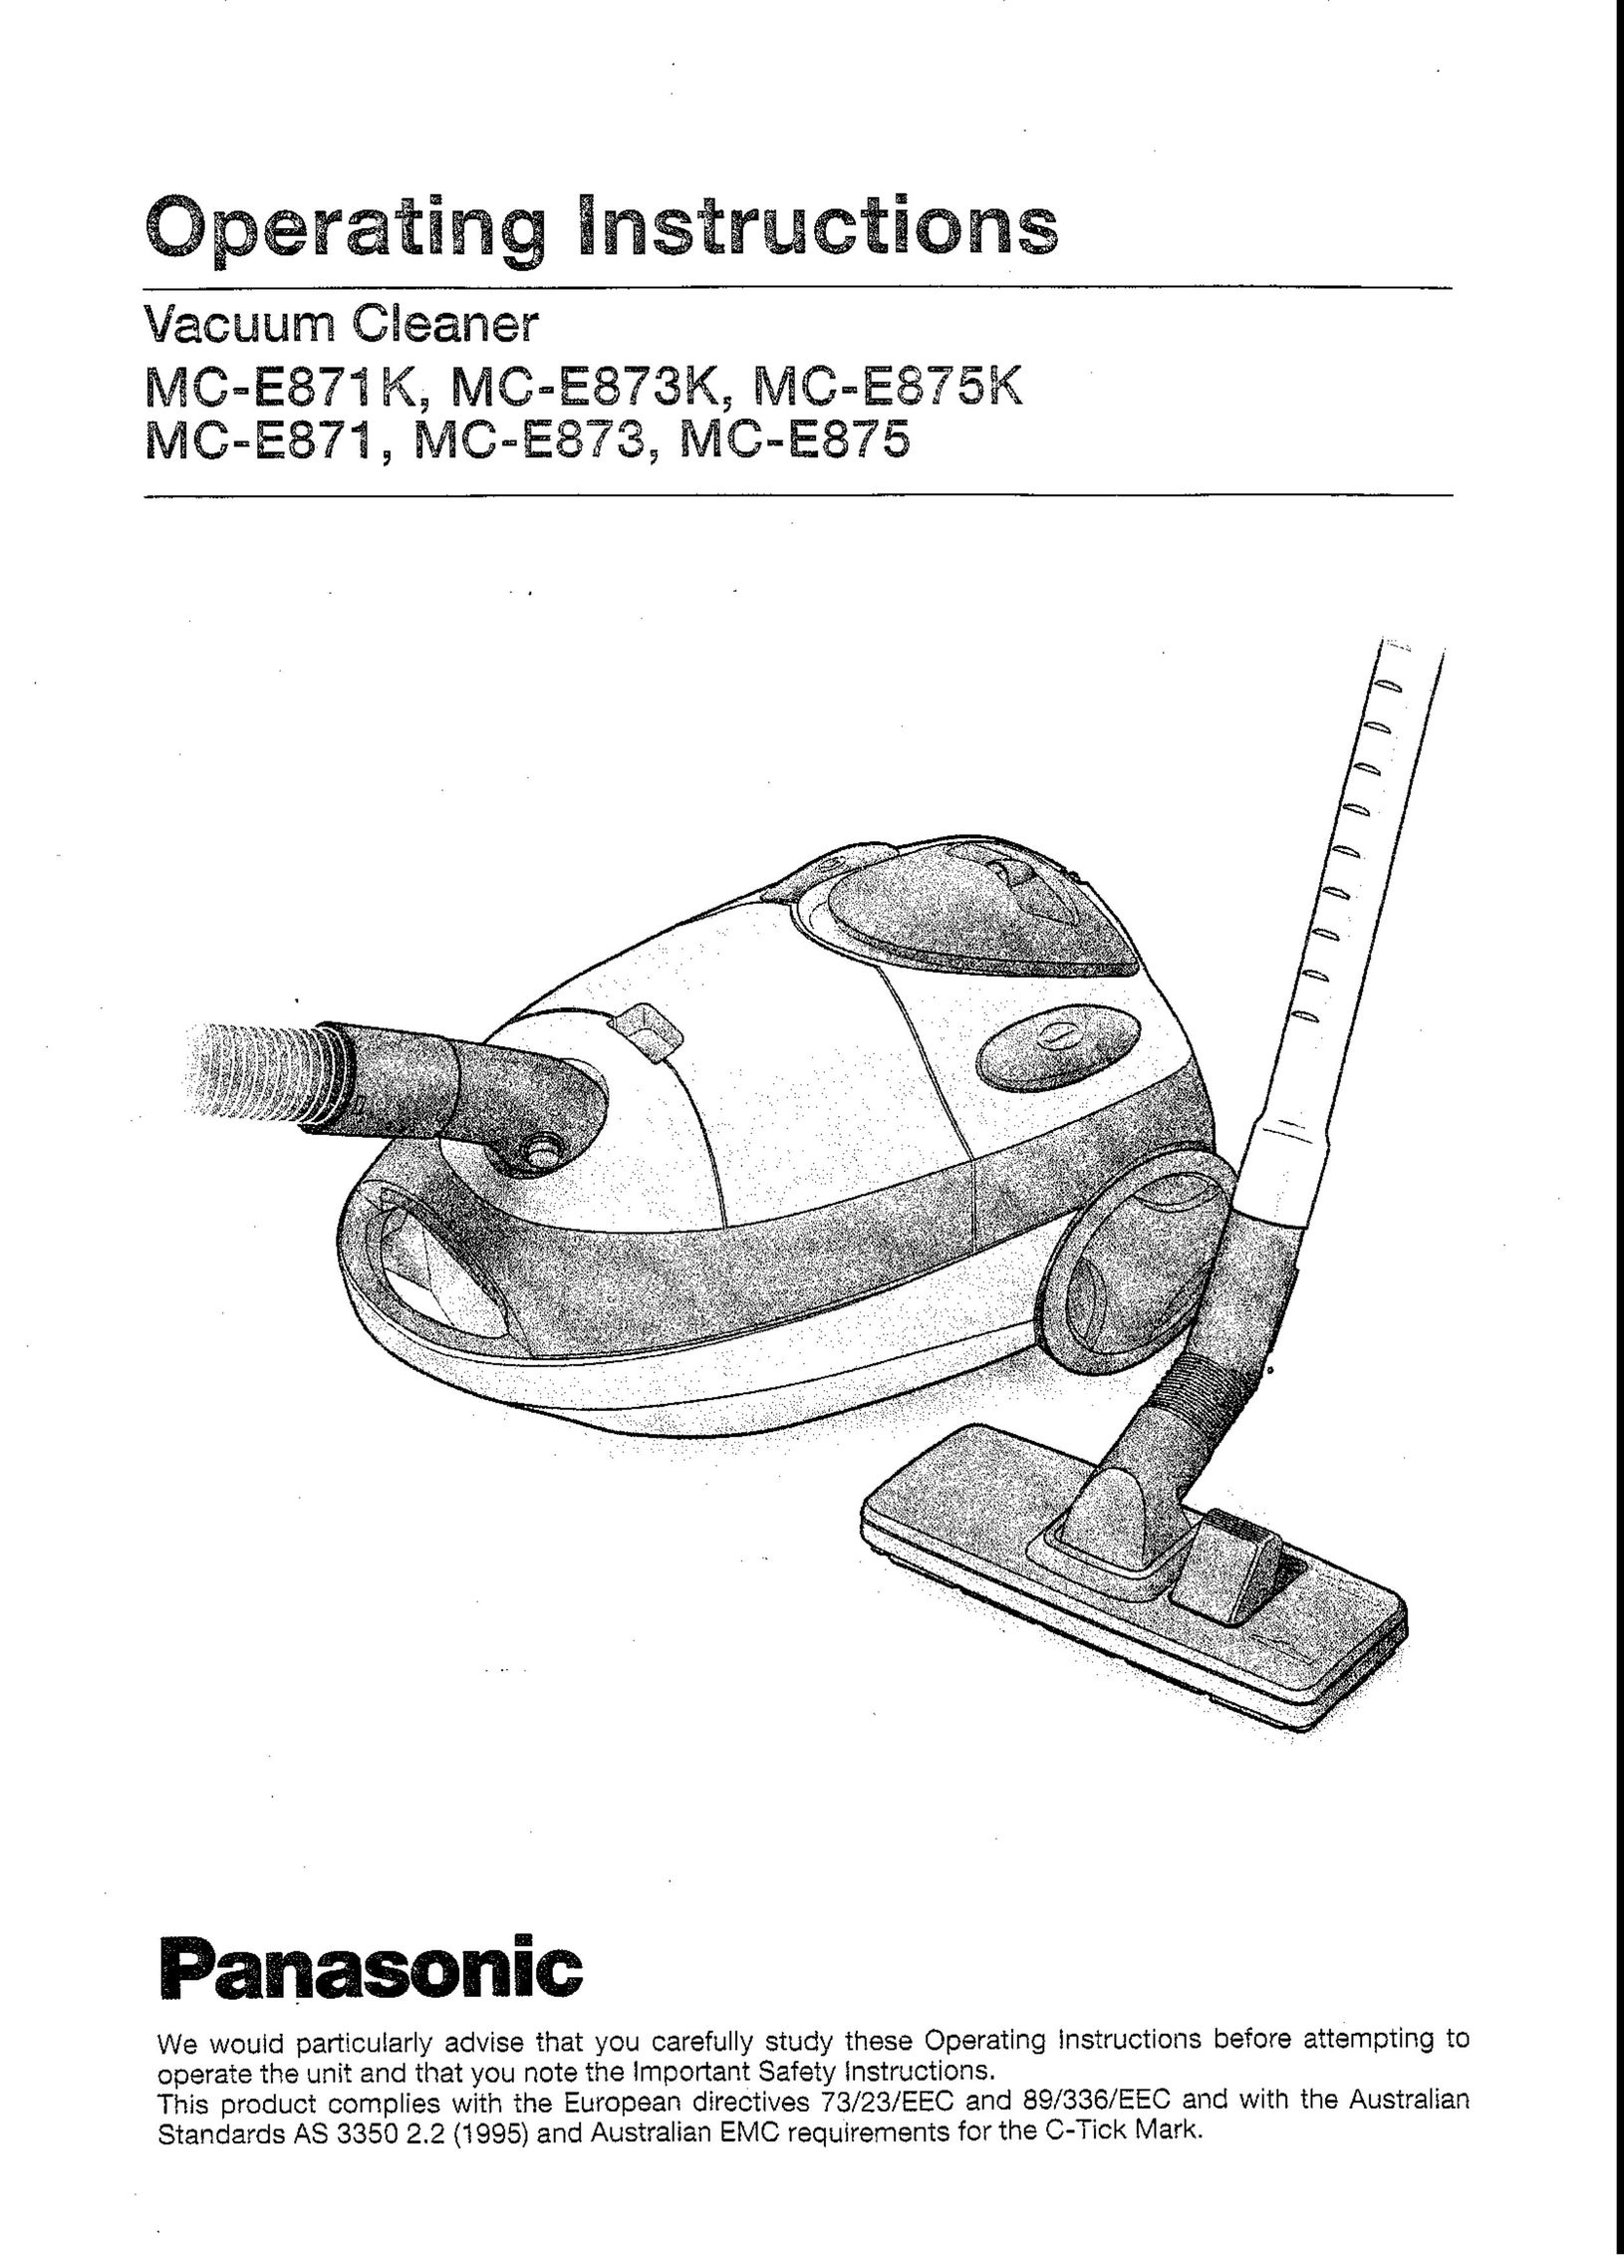 Panasonic MC-E873K Vacuum Cleaner User Manual